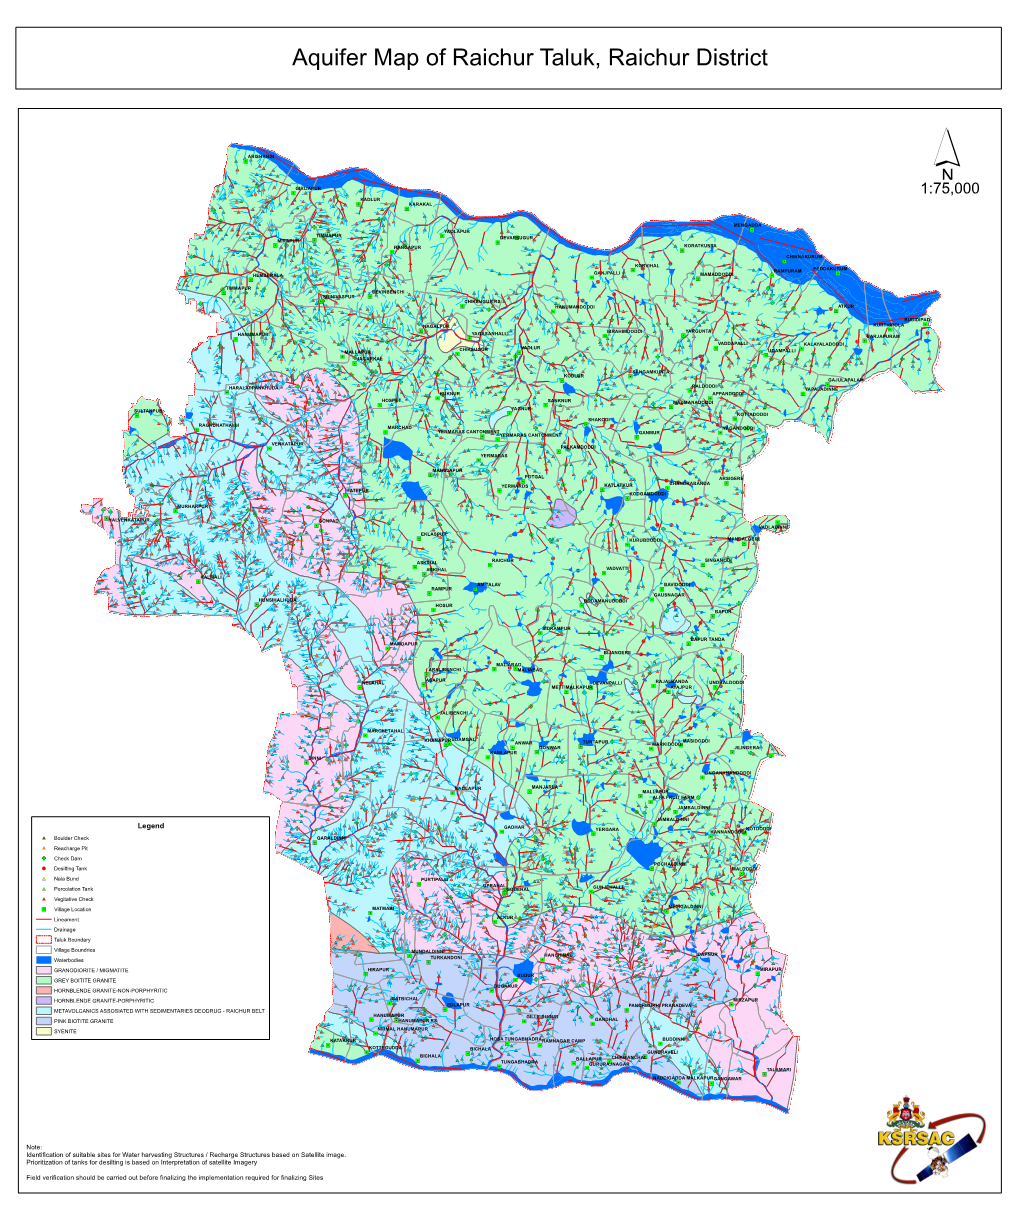 Aquifer Map of Raichur Taluk, Raichur District